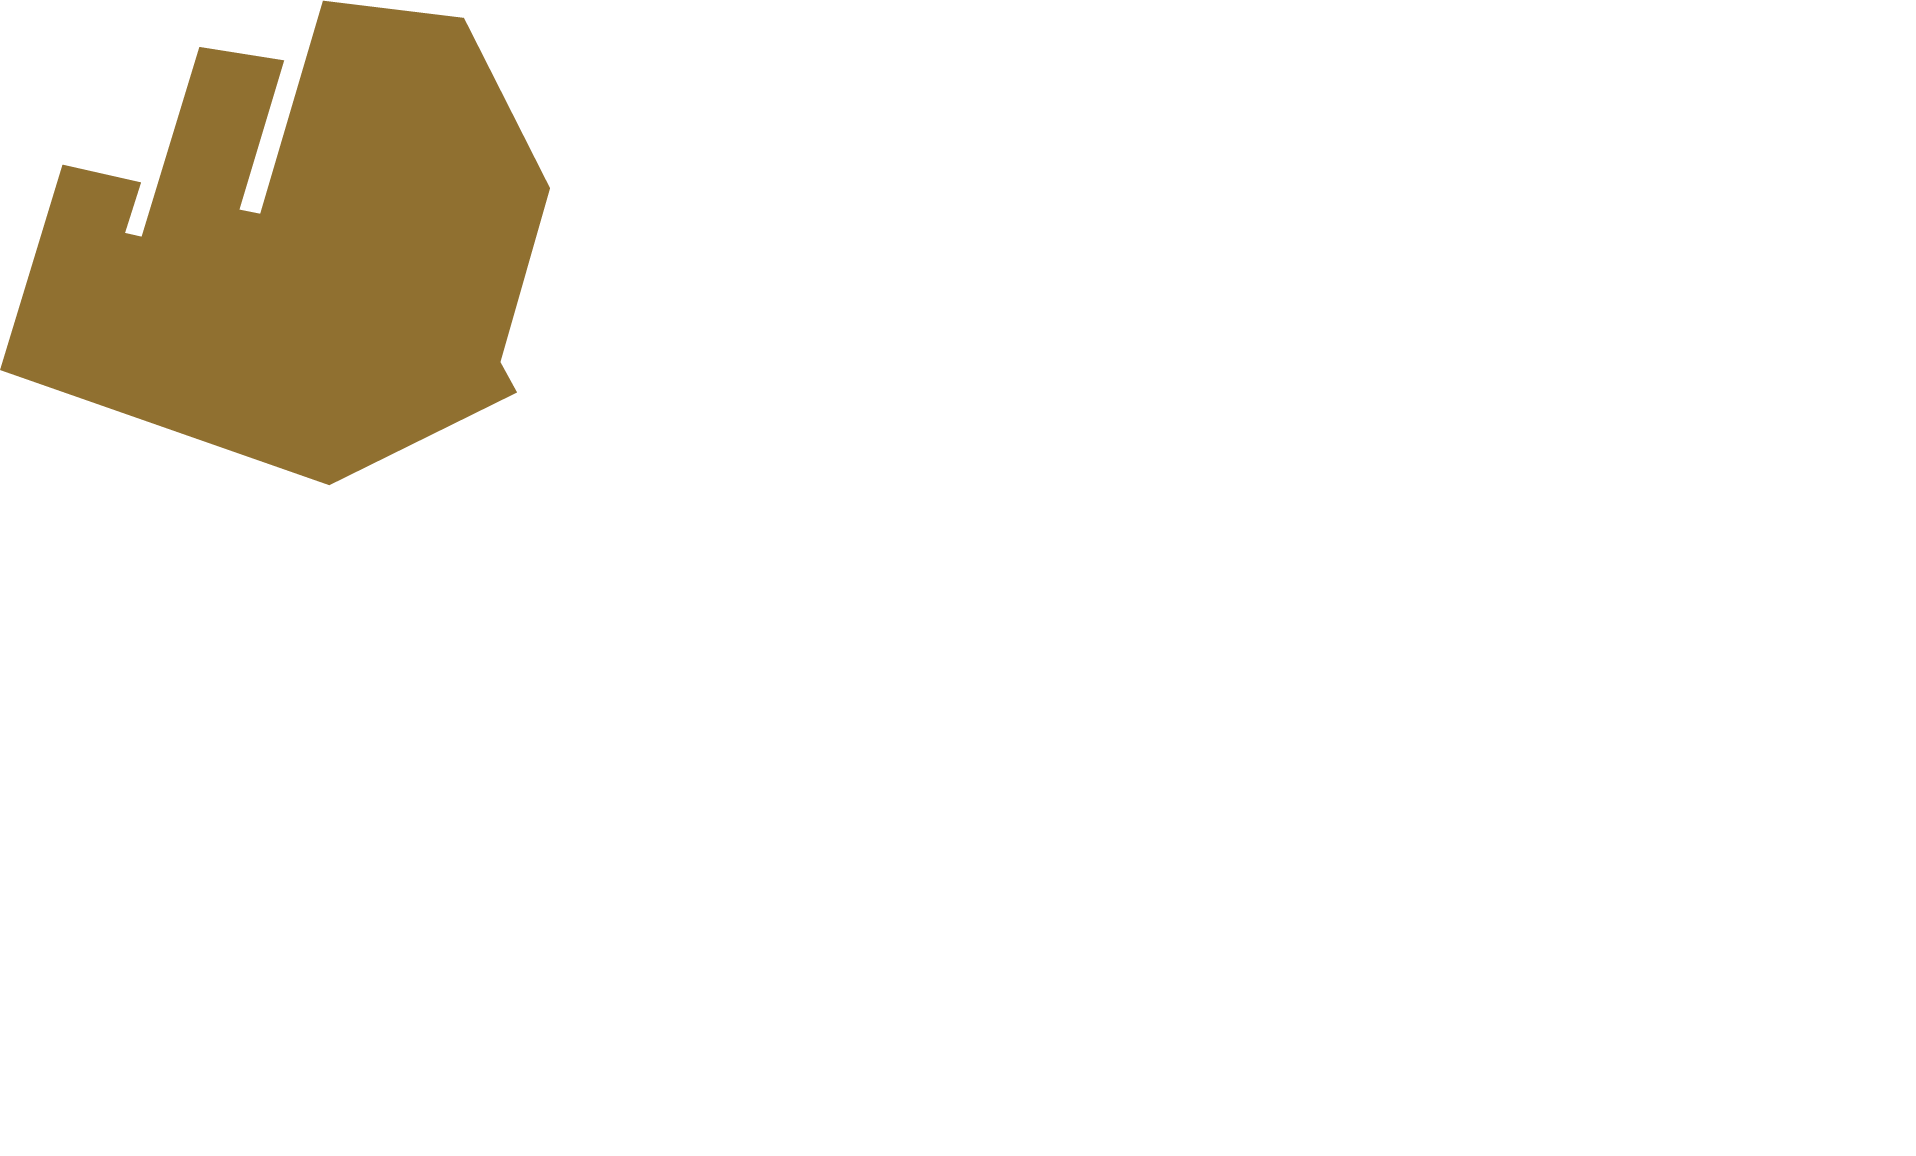 Effie Awards South Africa